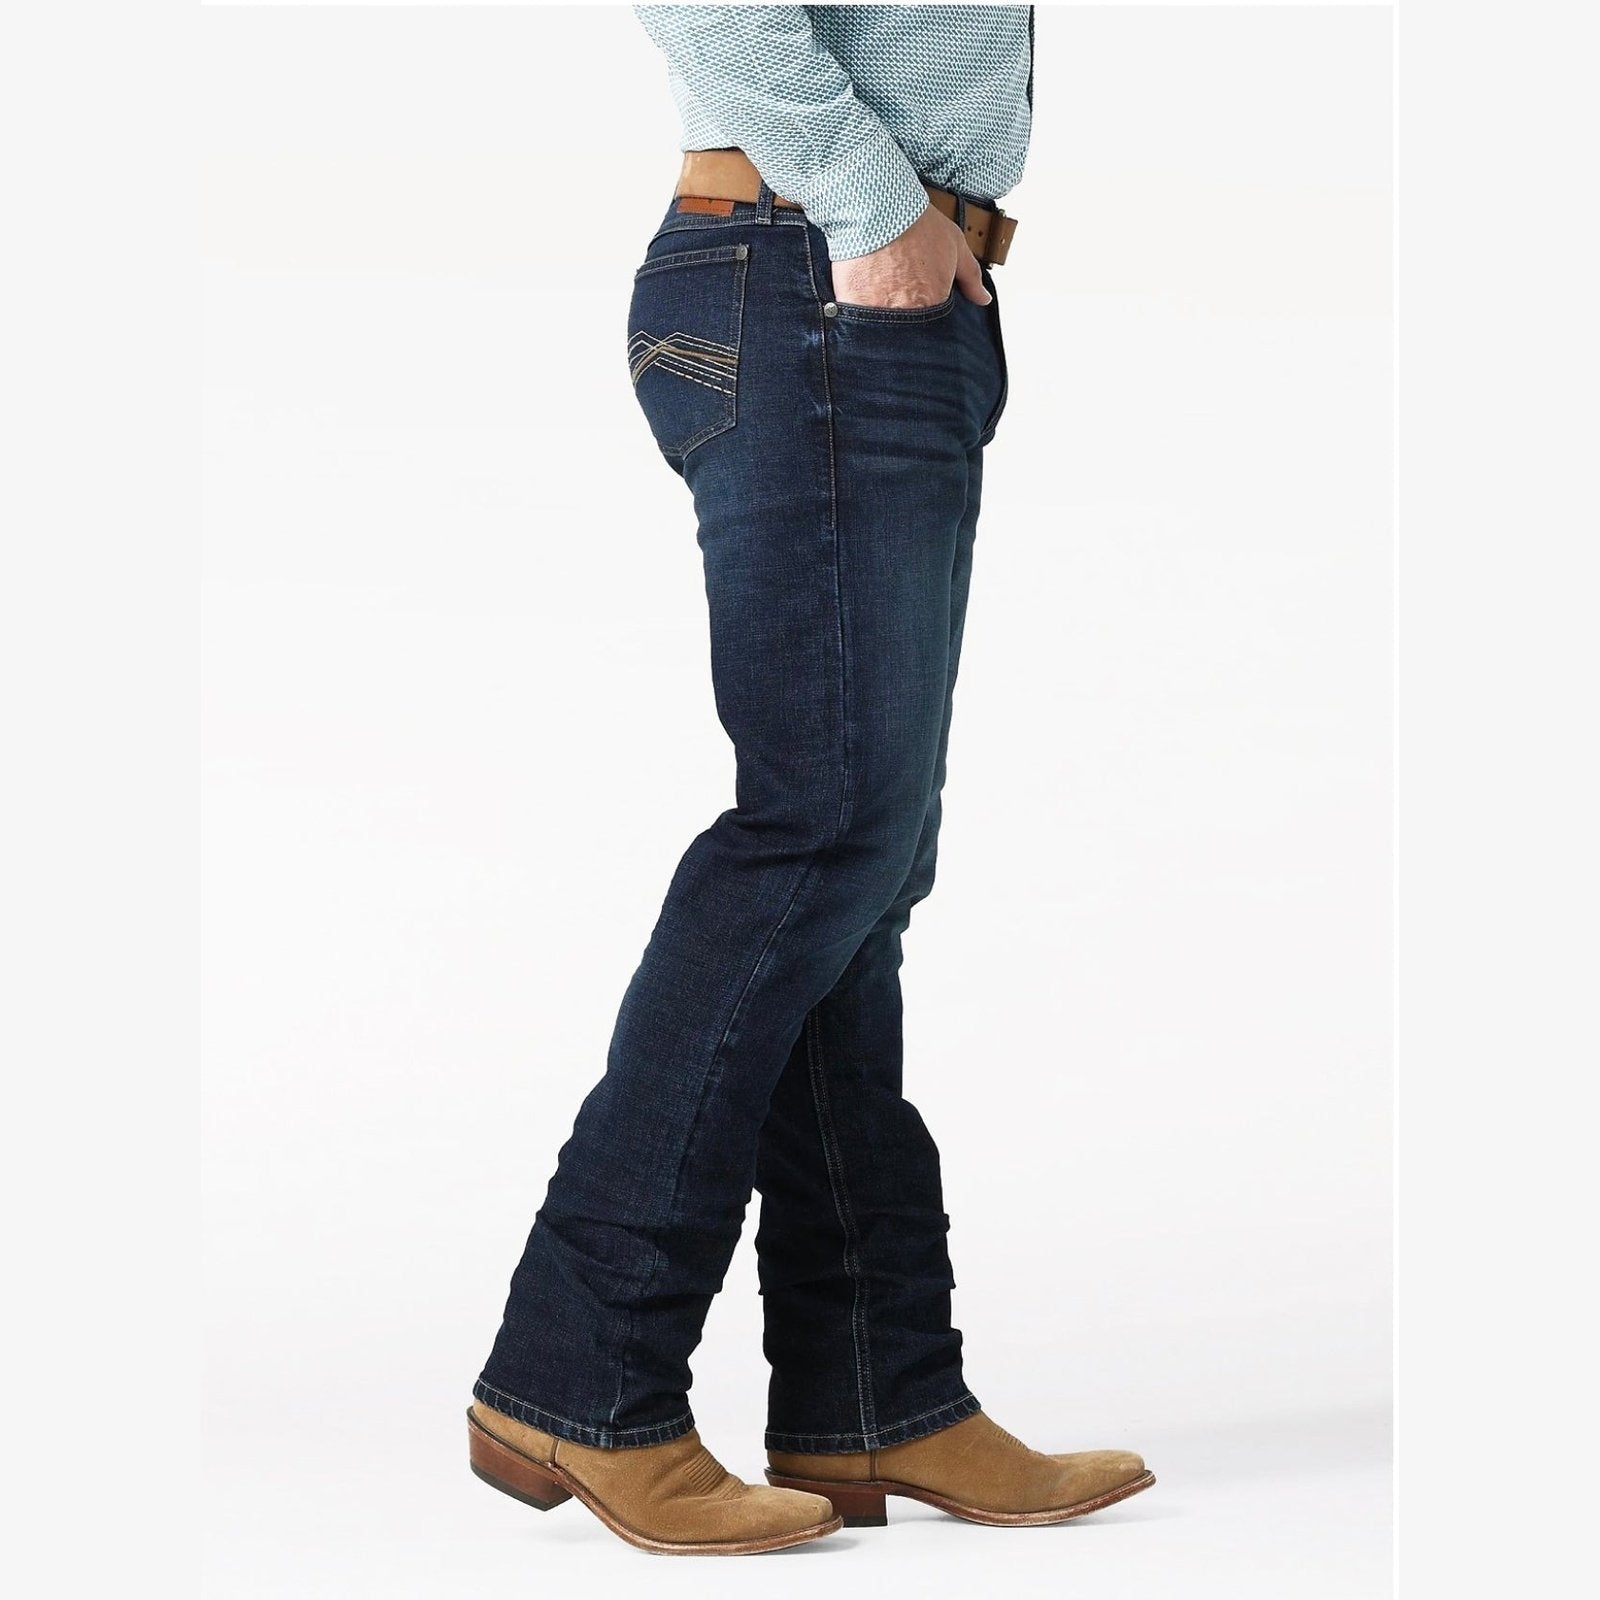 Wrangler Men’s Jeans 20X No. 44 Slim Straight 112317600 - Wrangler